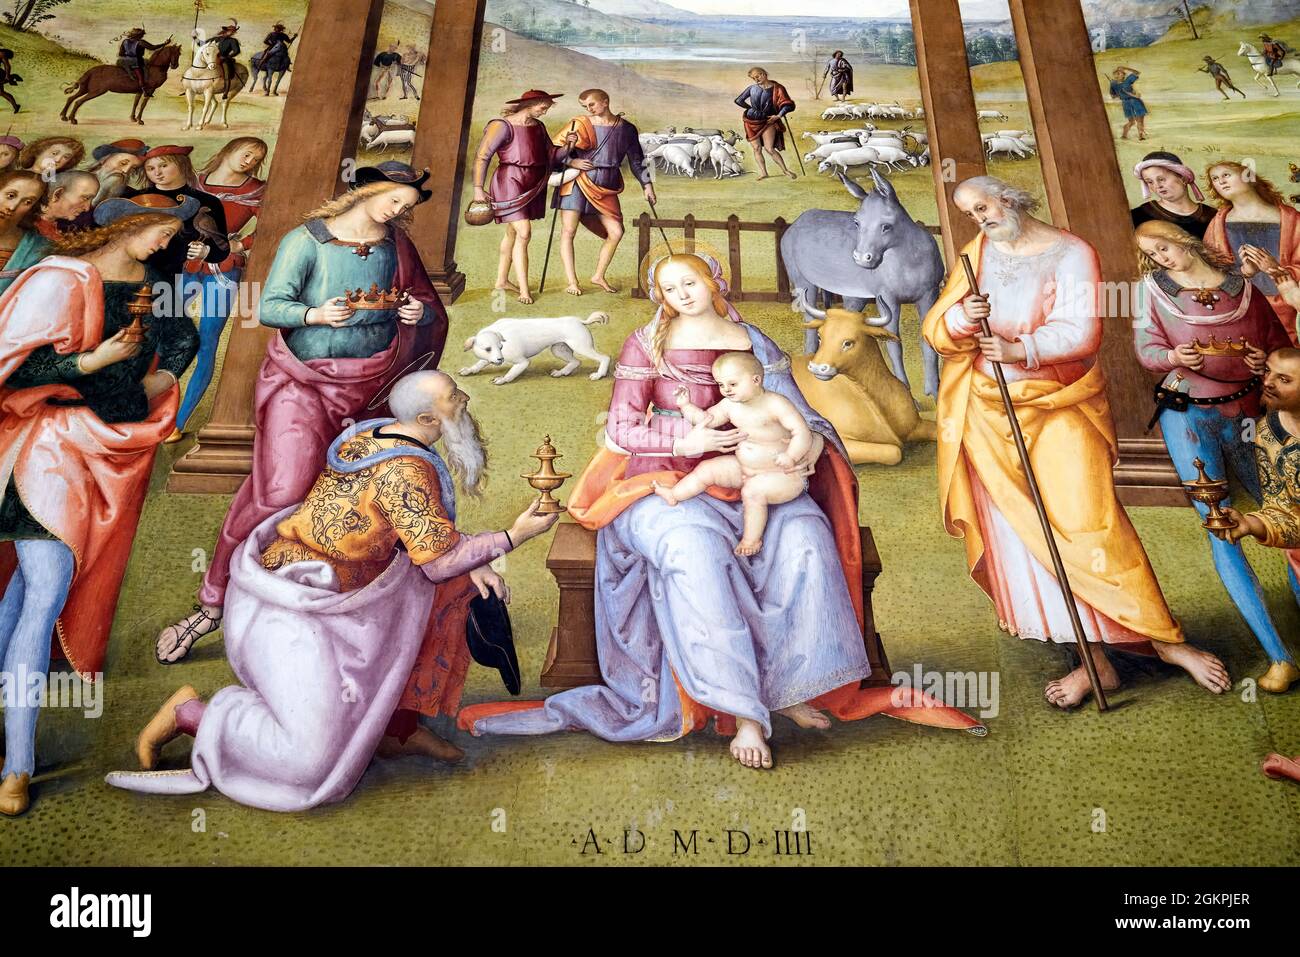 Città della Pieve Ombrie Italie. Église Santa Maria dei Bianchi. Adoration de la fresque de Magi par Perugino Banque D'Images